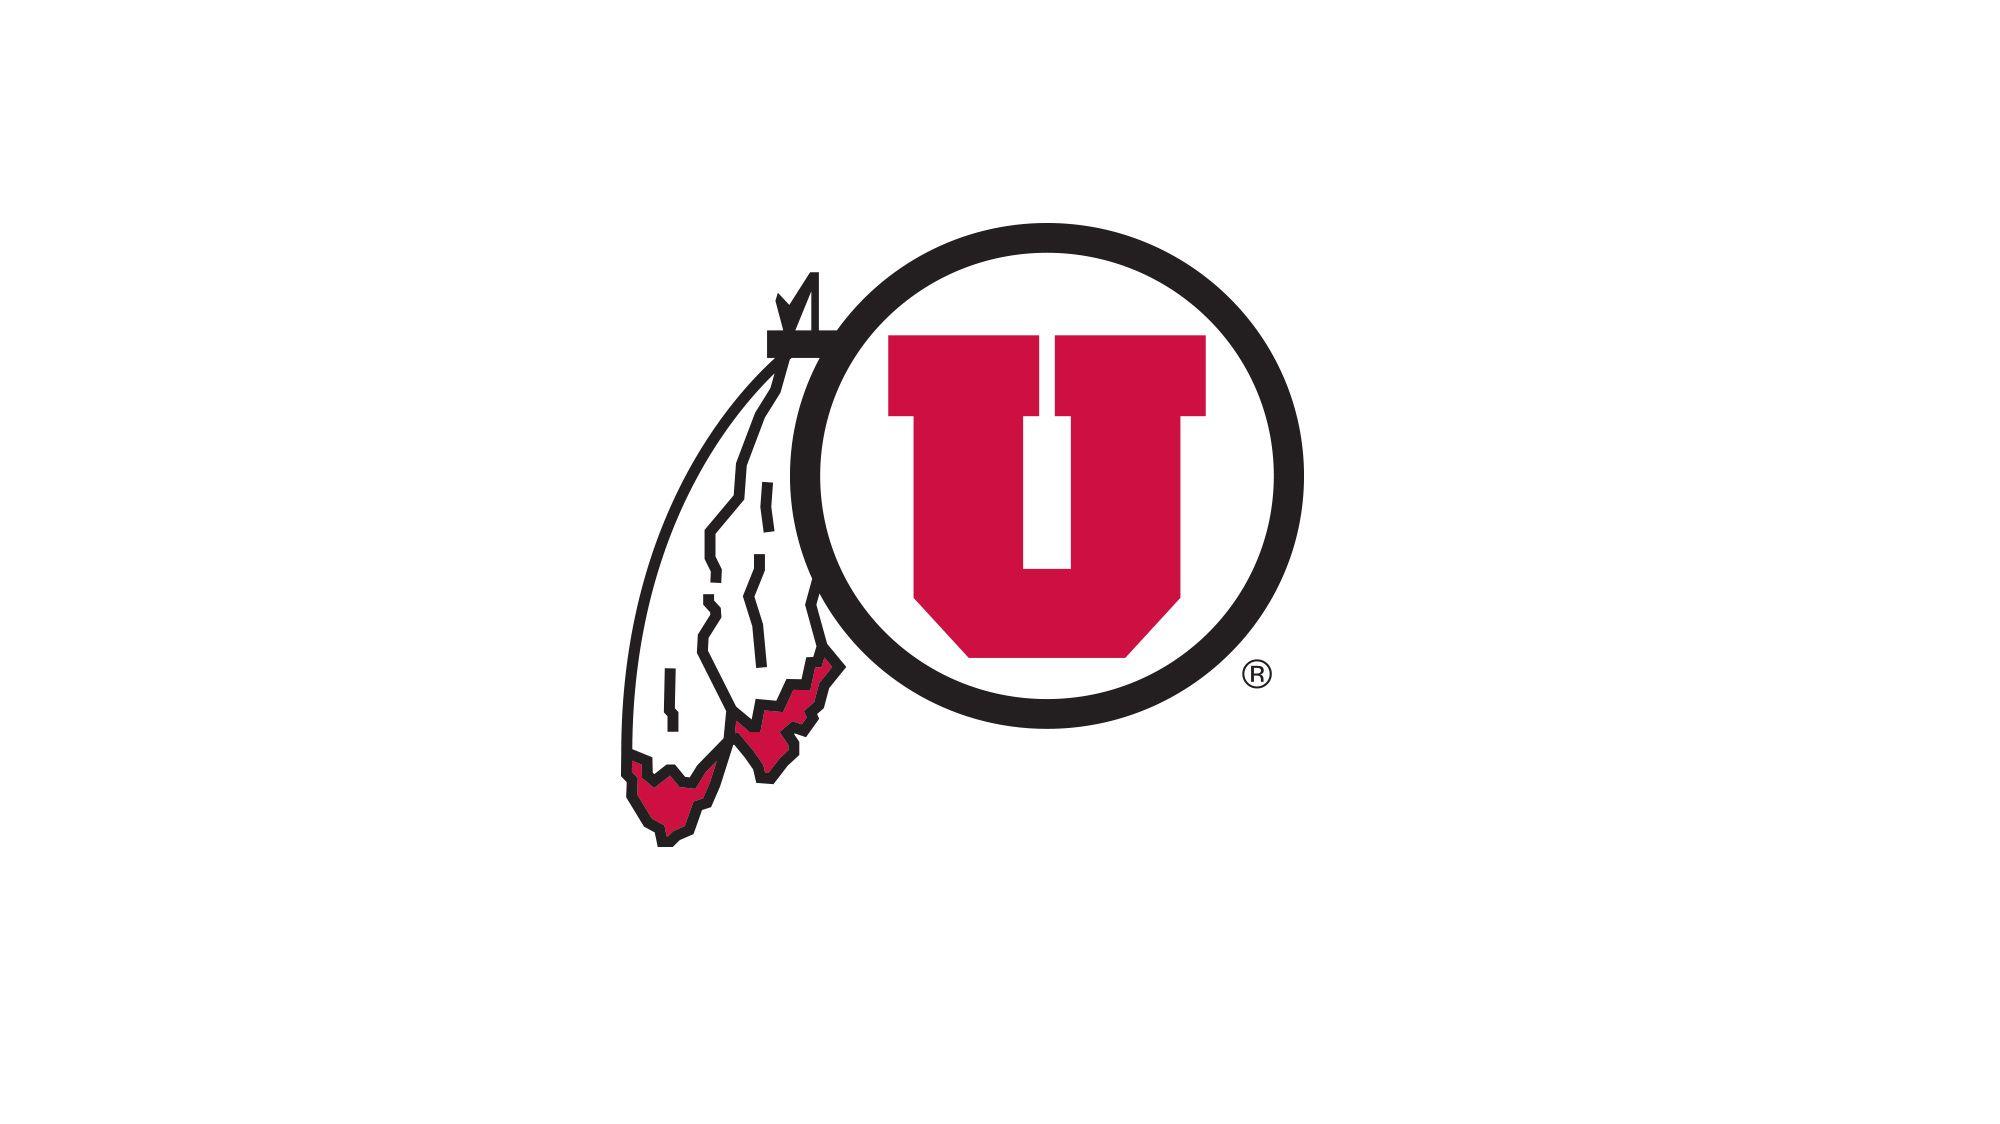 U of U Logo - Utah Athletics to Partner with Learfield - University of Utah Athletics